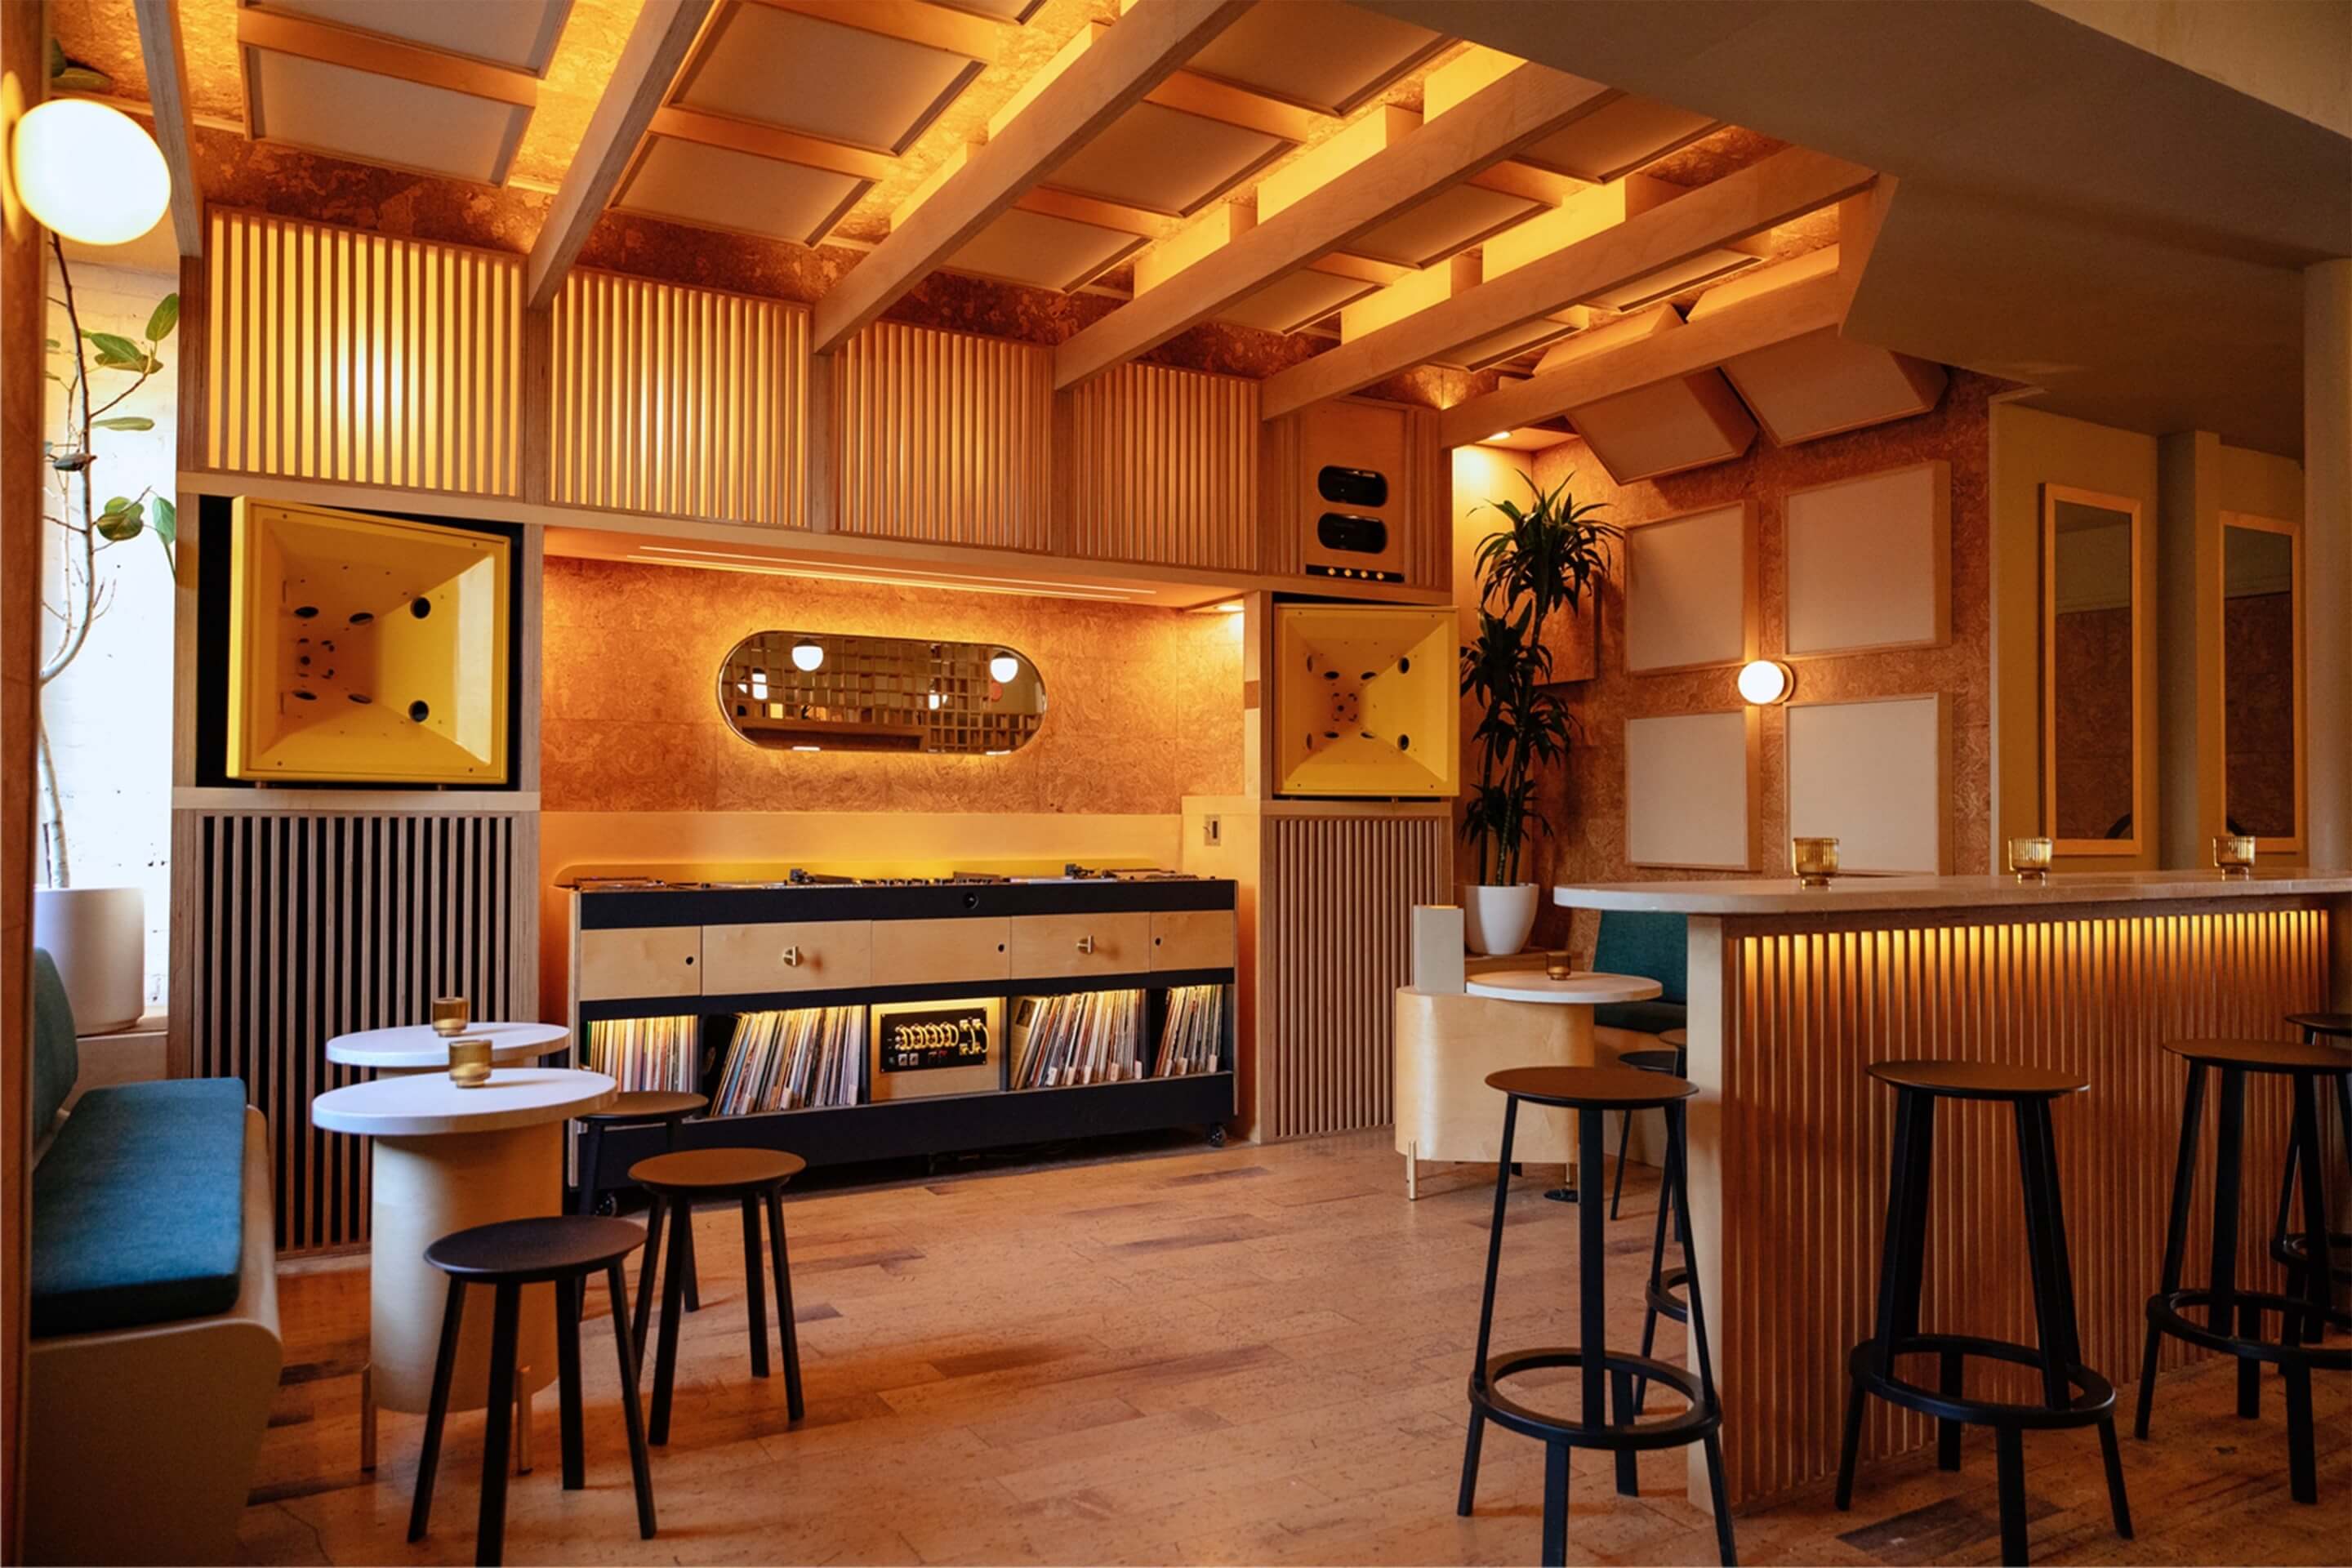 Brooklyn Eavesdrop Bar - a sound room inspired by Japanese music bars